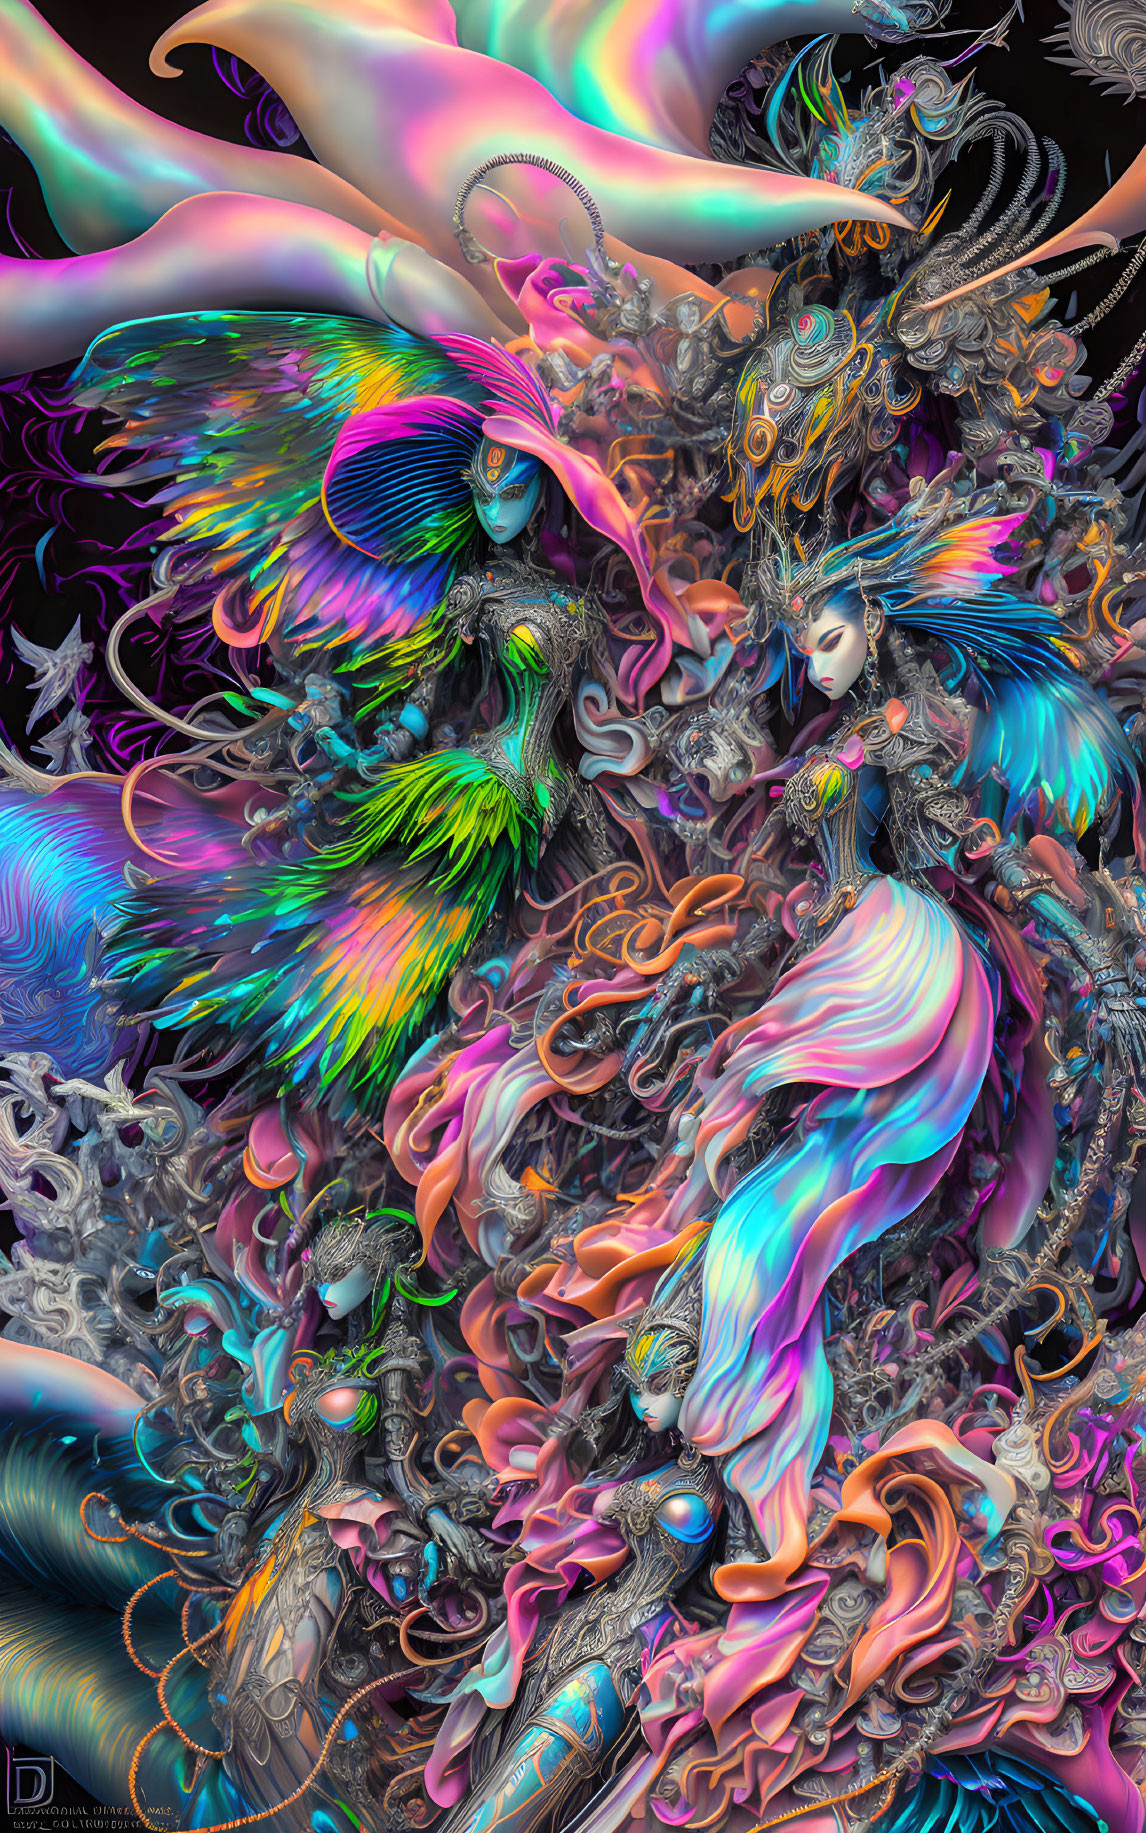 Colorful Digital Artwork: Fantastical Figure with Mechanical Wings